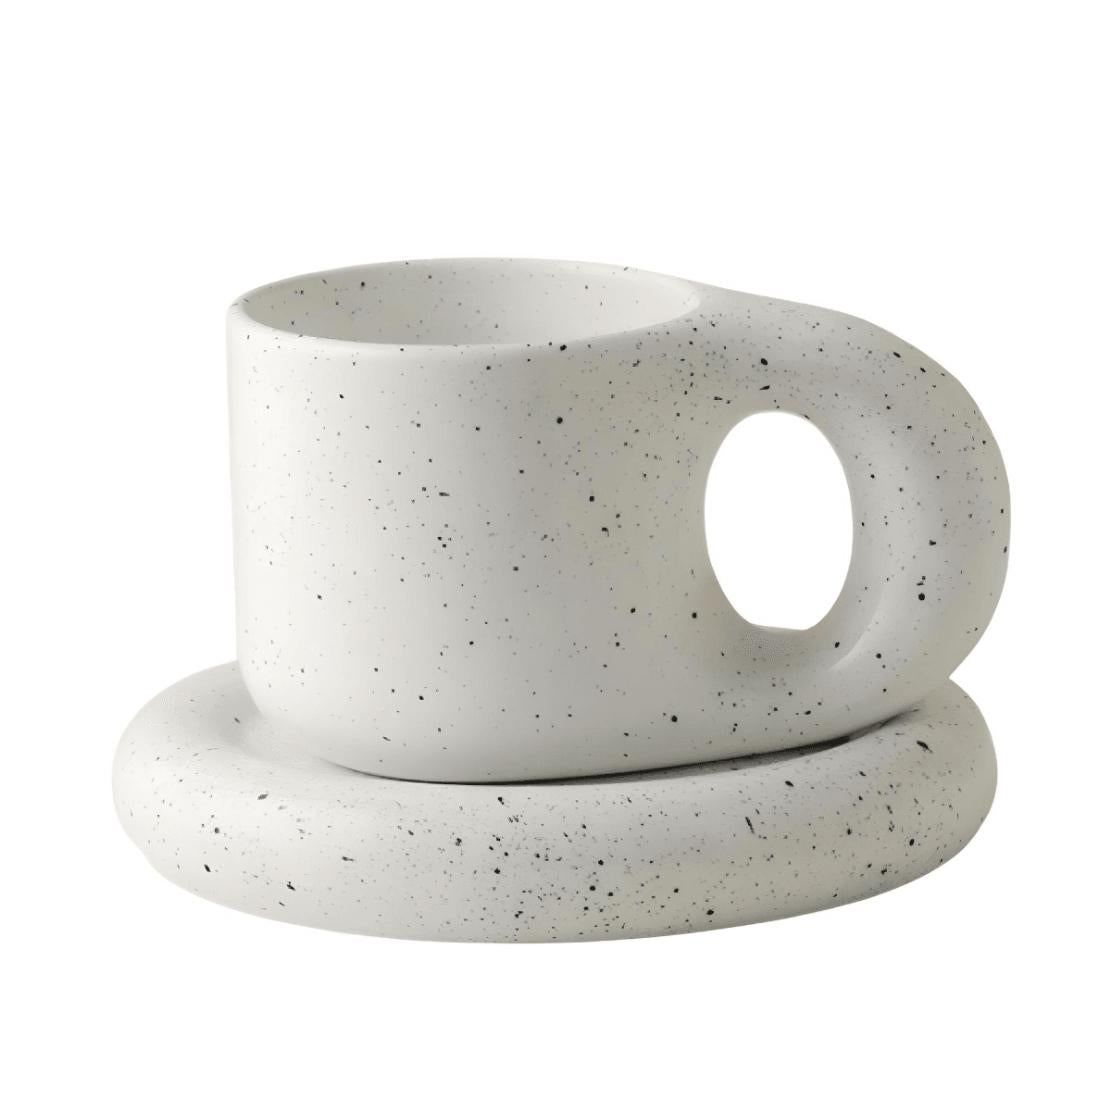 White chunky ceramic mug and saucer